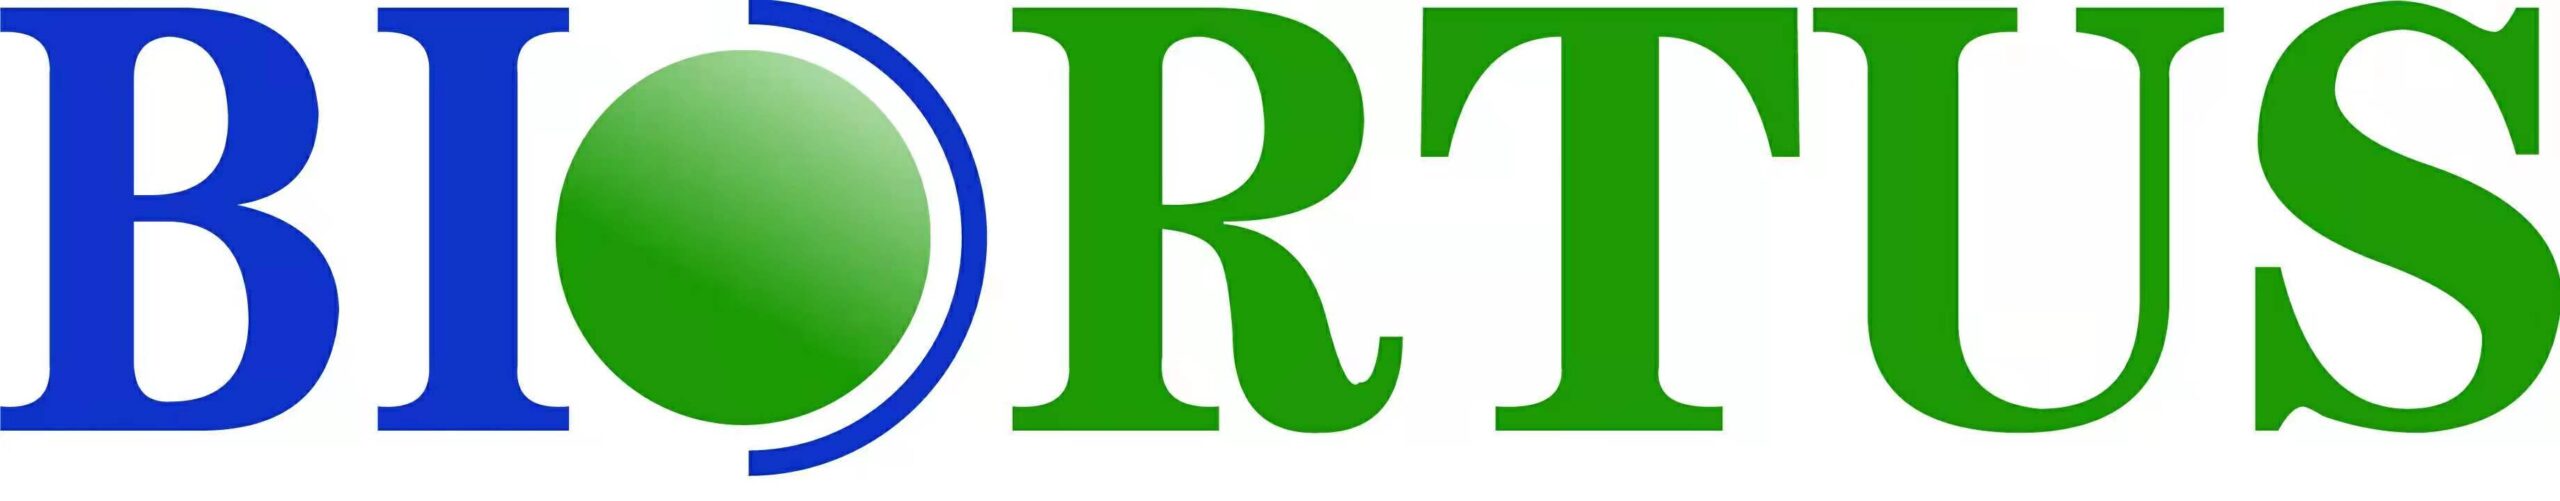 Biortus-logo (1)